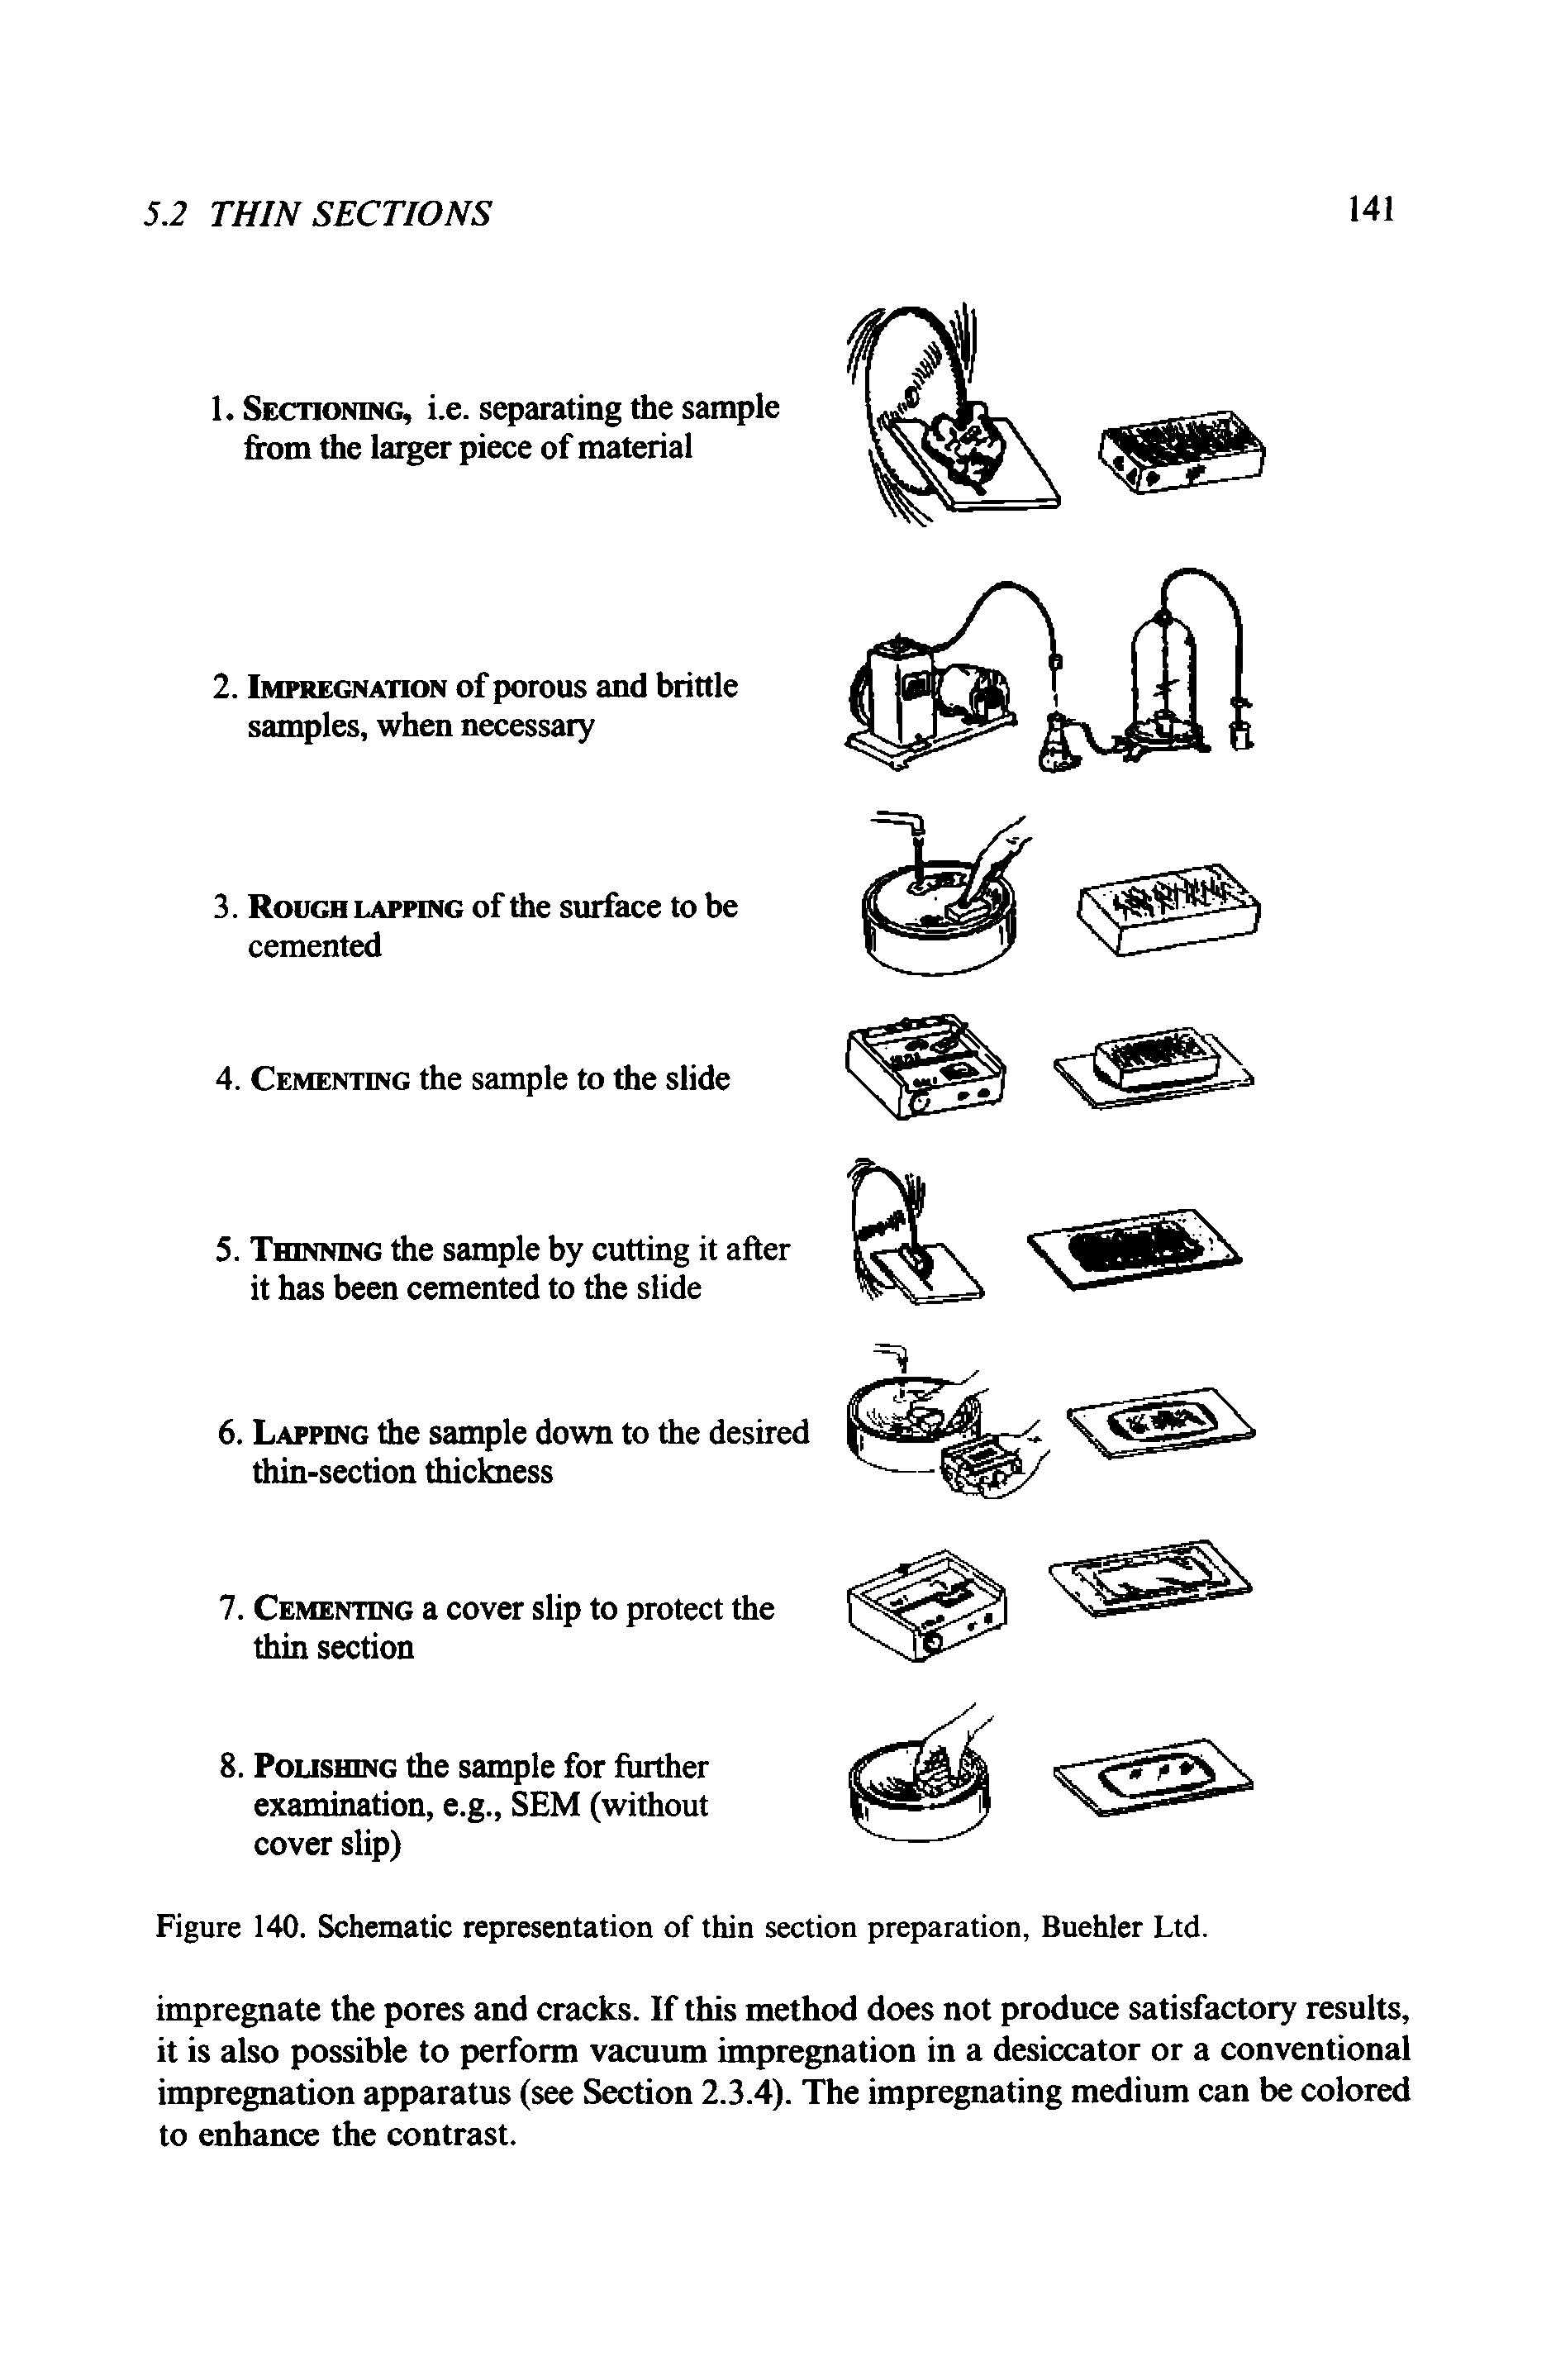 Figure 140. Schematic representation of thin section preparation, Buehler Ltd.